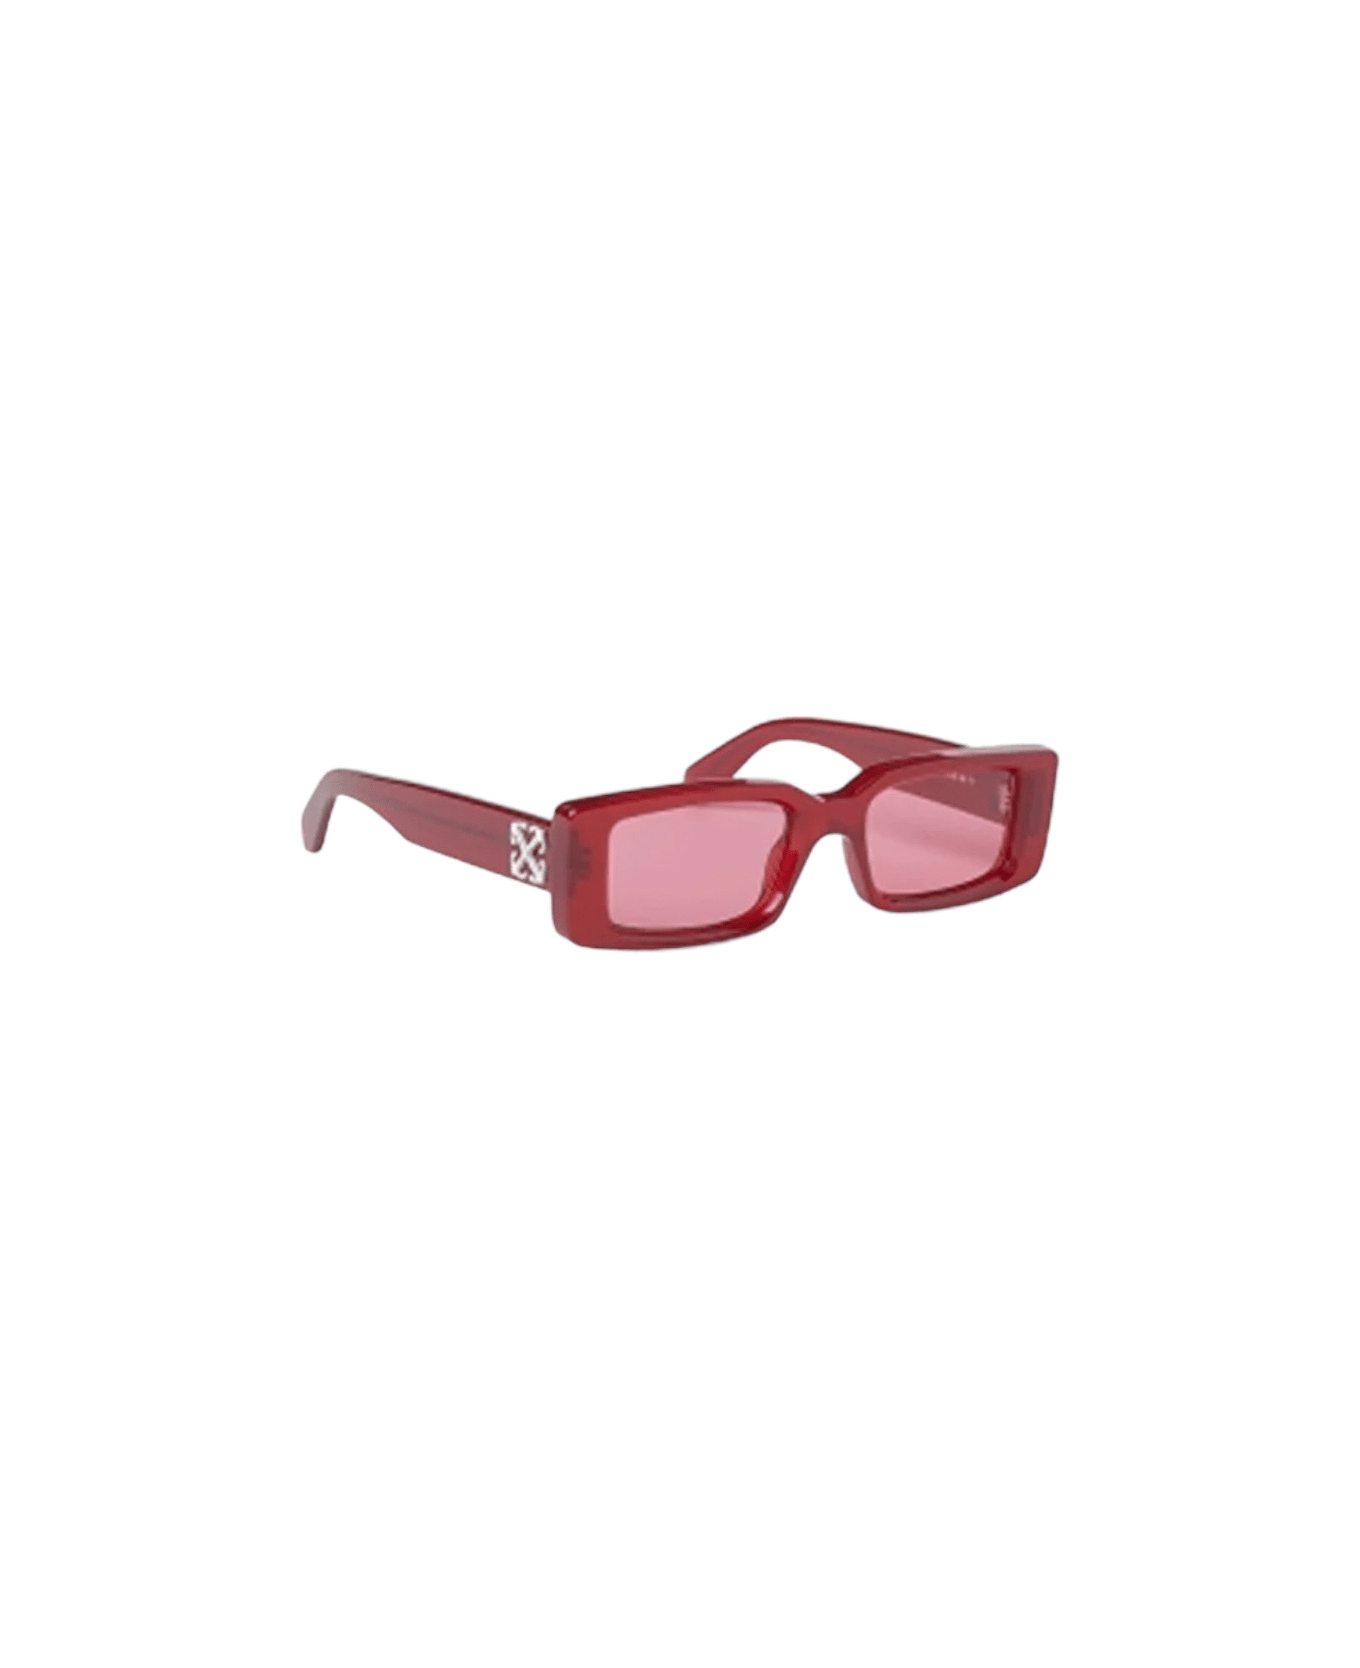 Off-White Arthur - Oeri127 Sunglasses